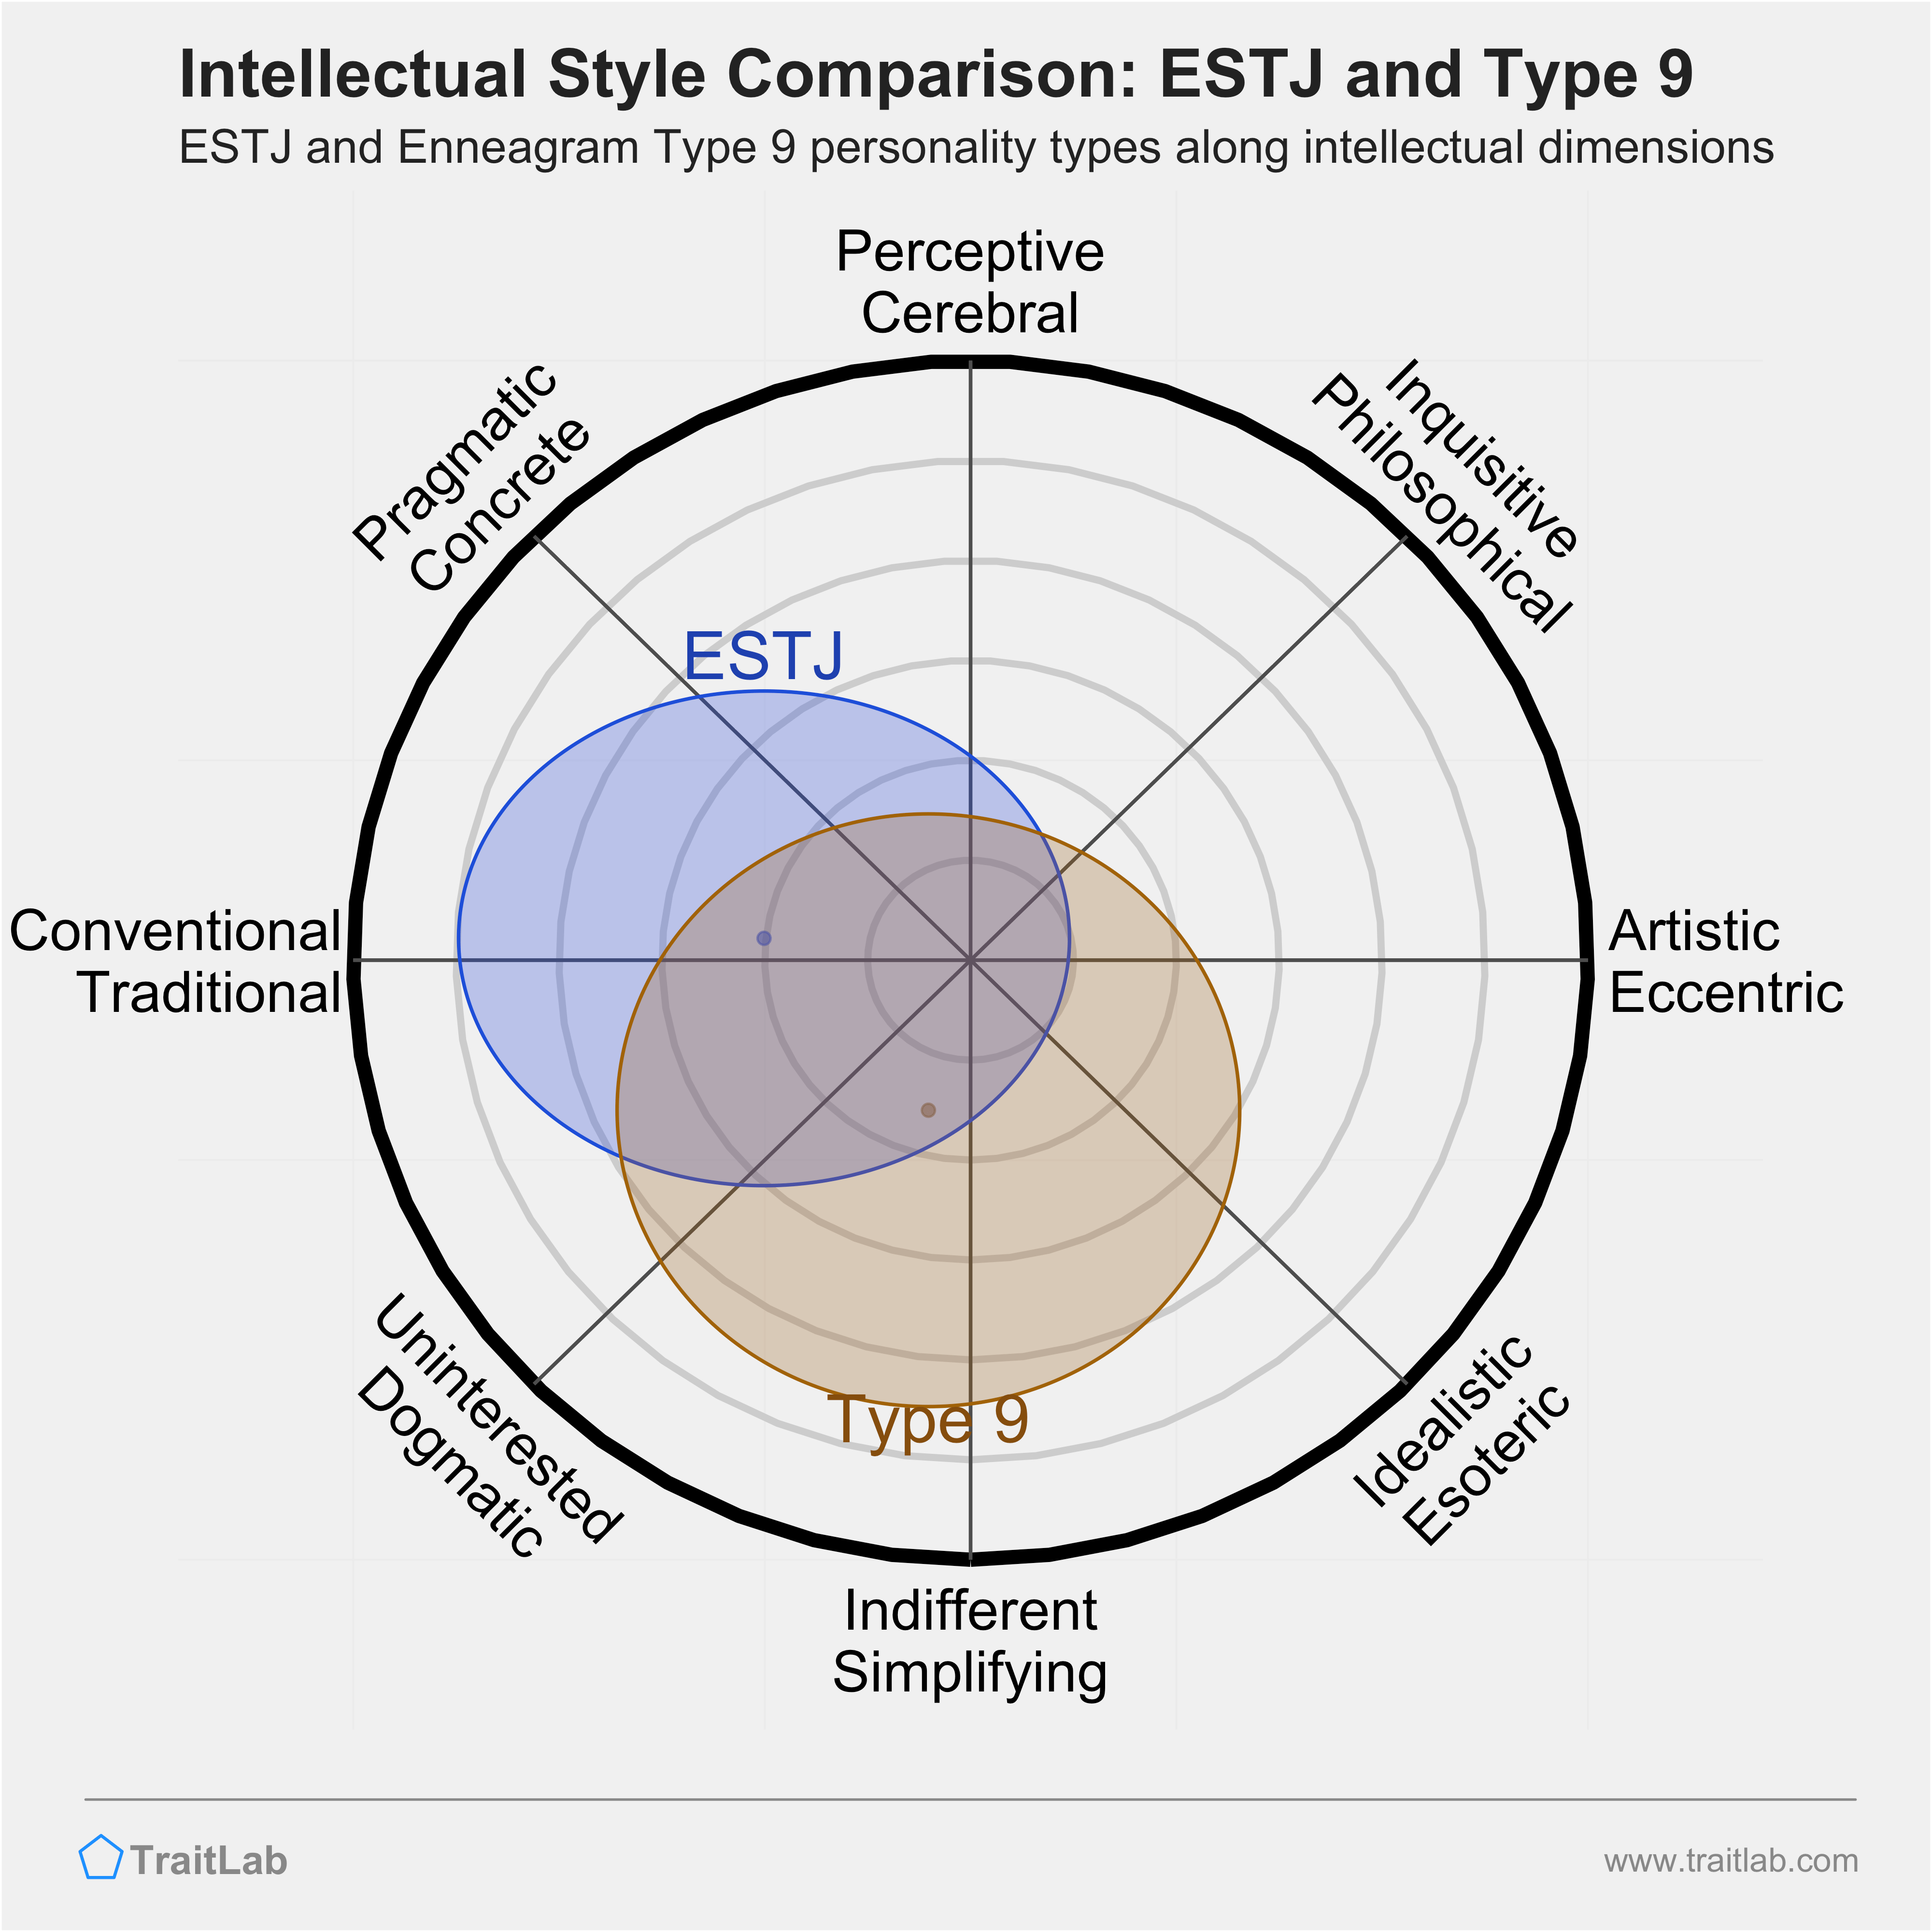 ESTJ and Type 9 comparison across intellectual dimensions